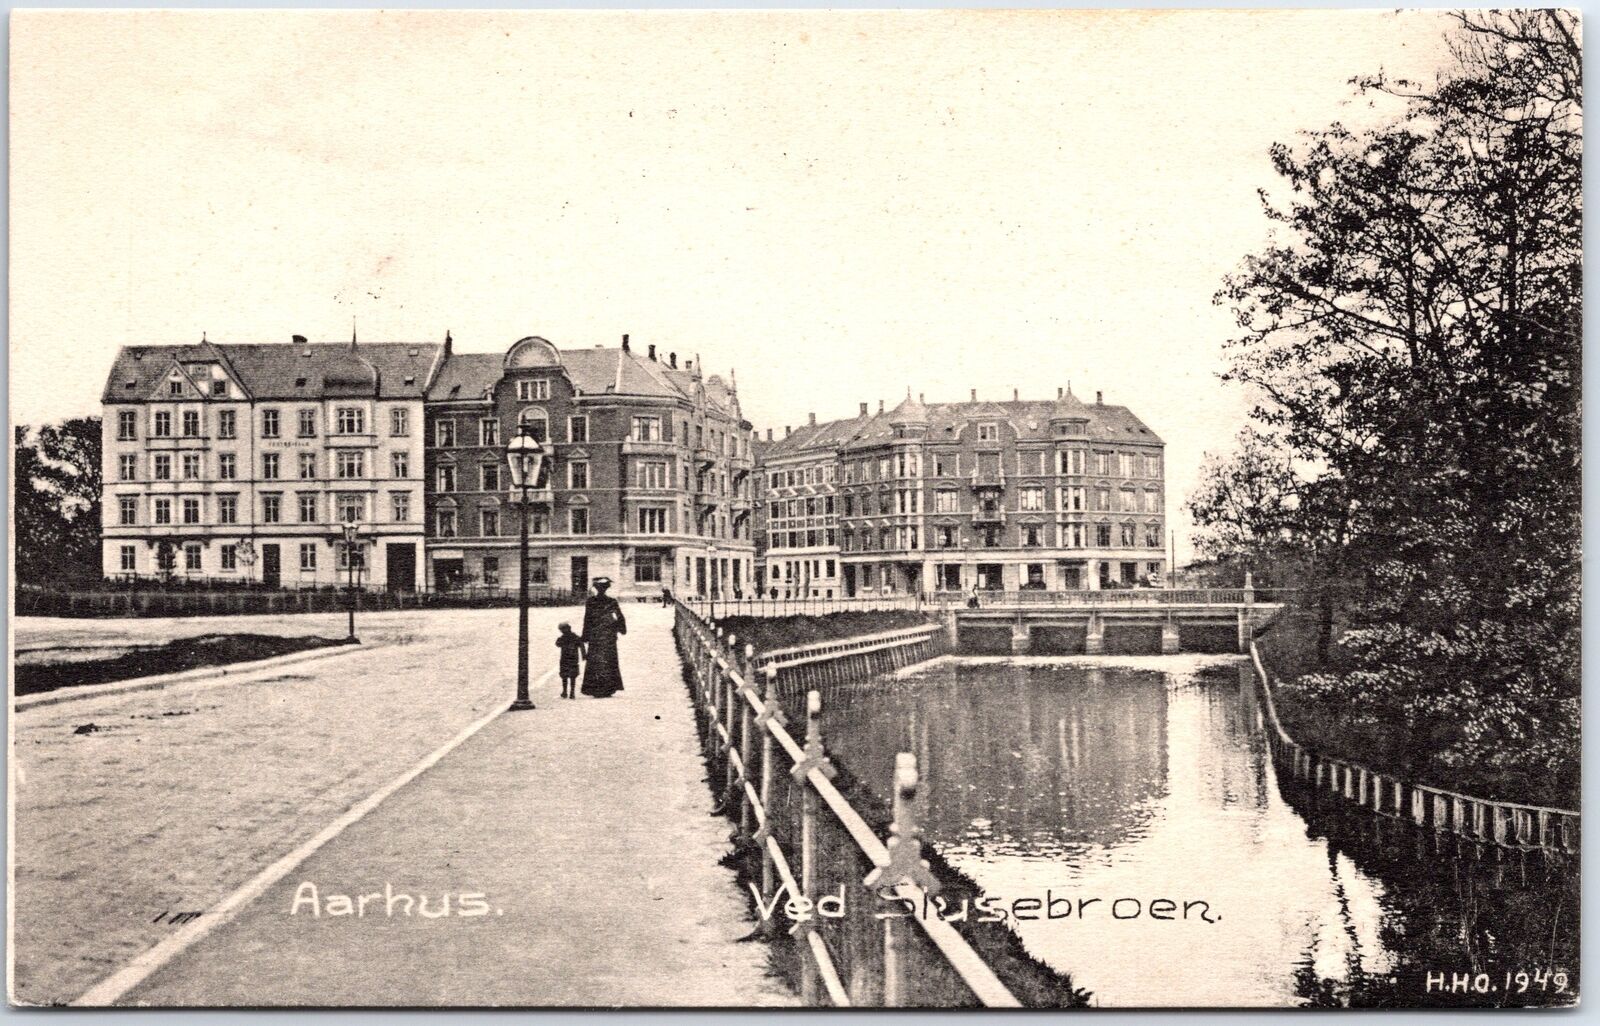 VINTAGE POSTCARD CANAL SCENE AT ARHUS DENMARK c. 1903 (SCARCE)